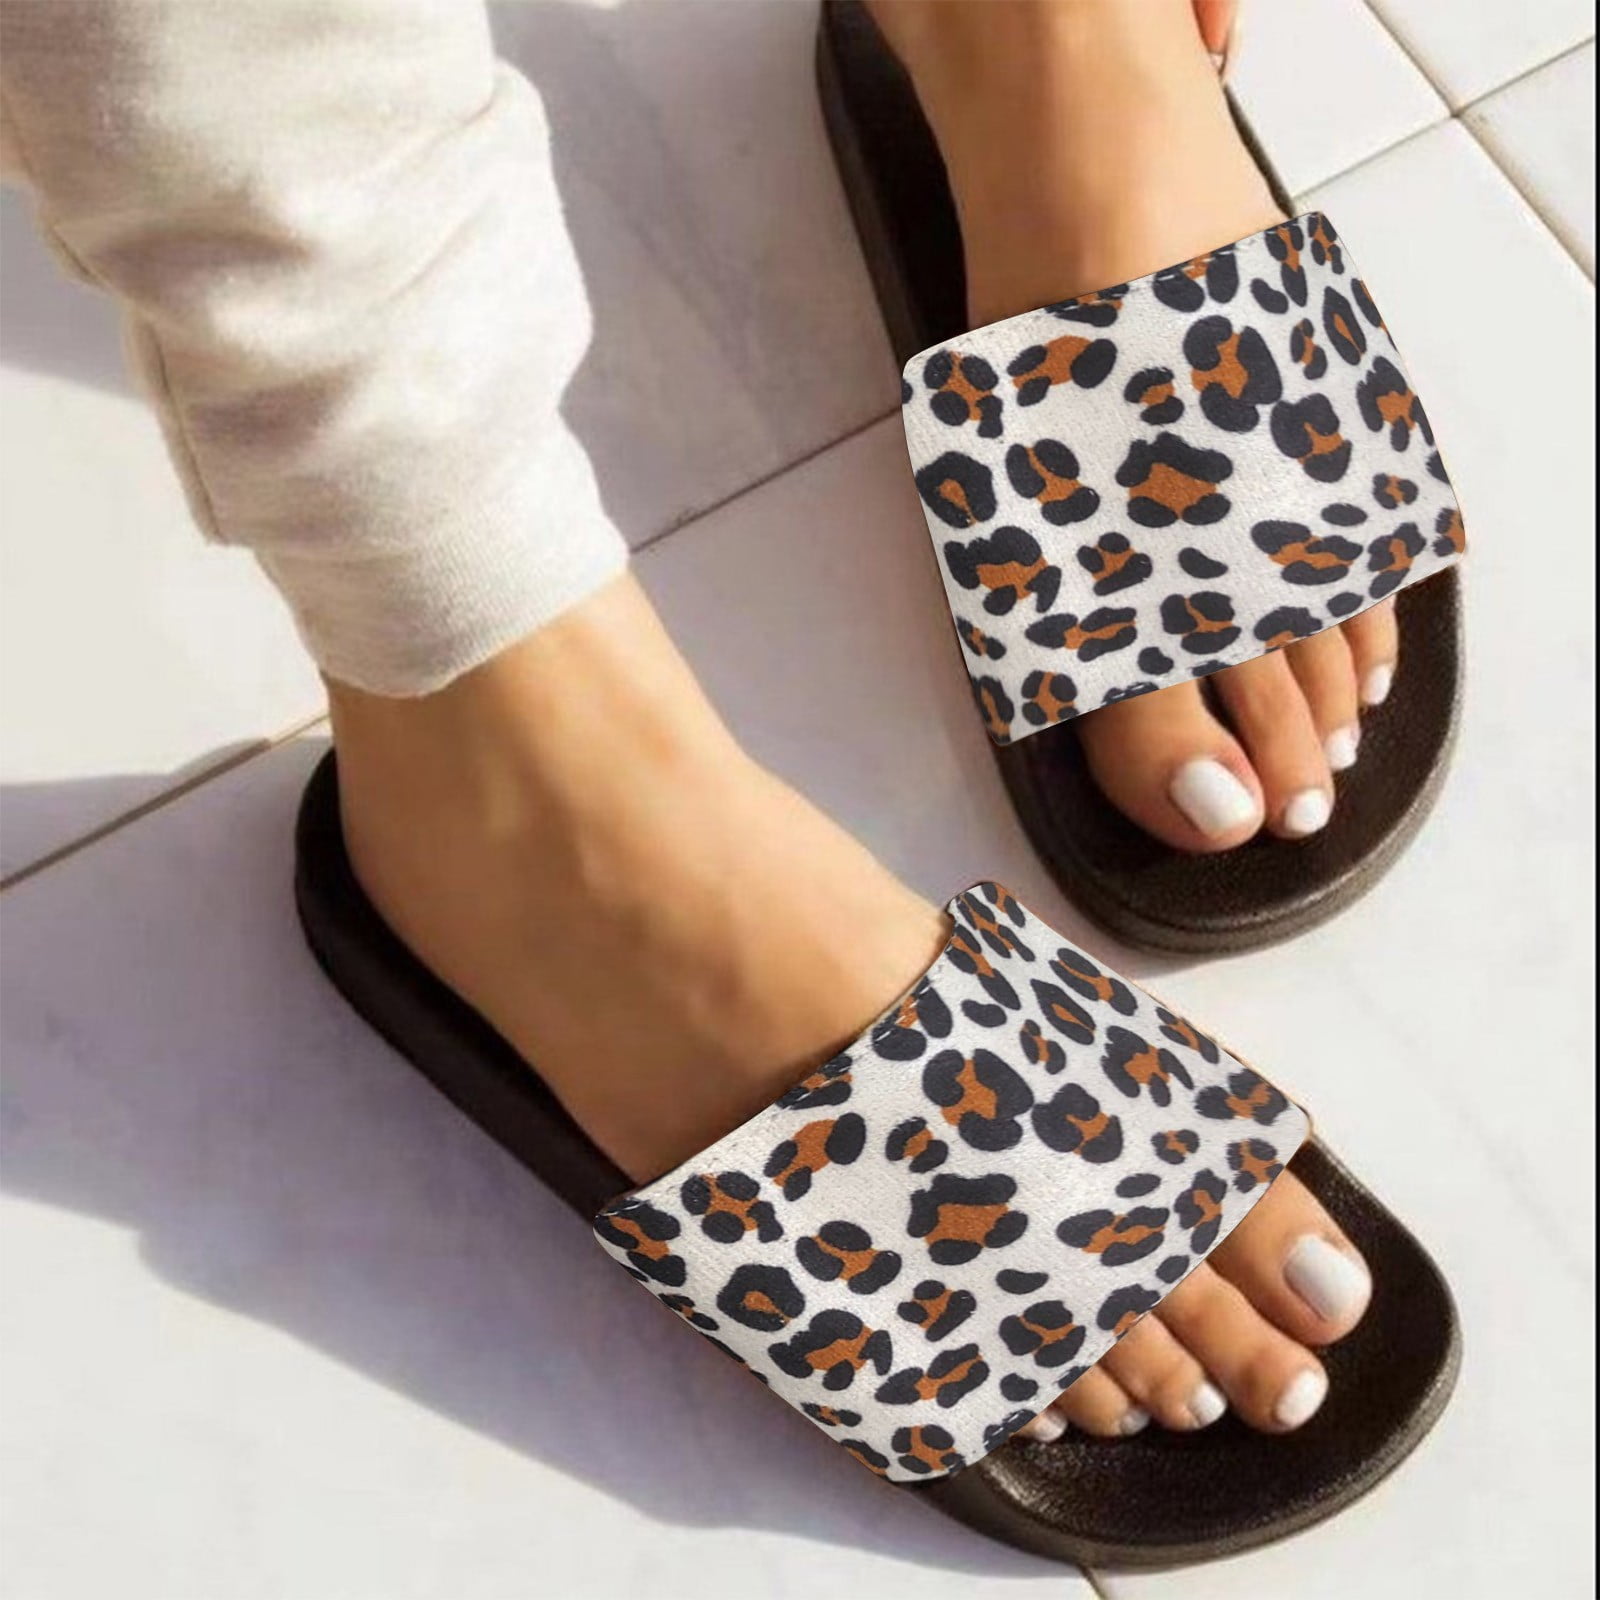 Yilirongyumm〗 38 Slippers For Women Slippers And Toe Spring Leopard Print Round Flat Heel Fashion Summer Women's - Walmart.com